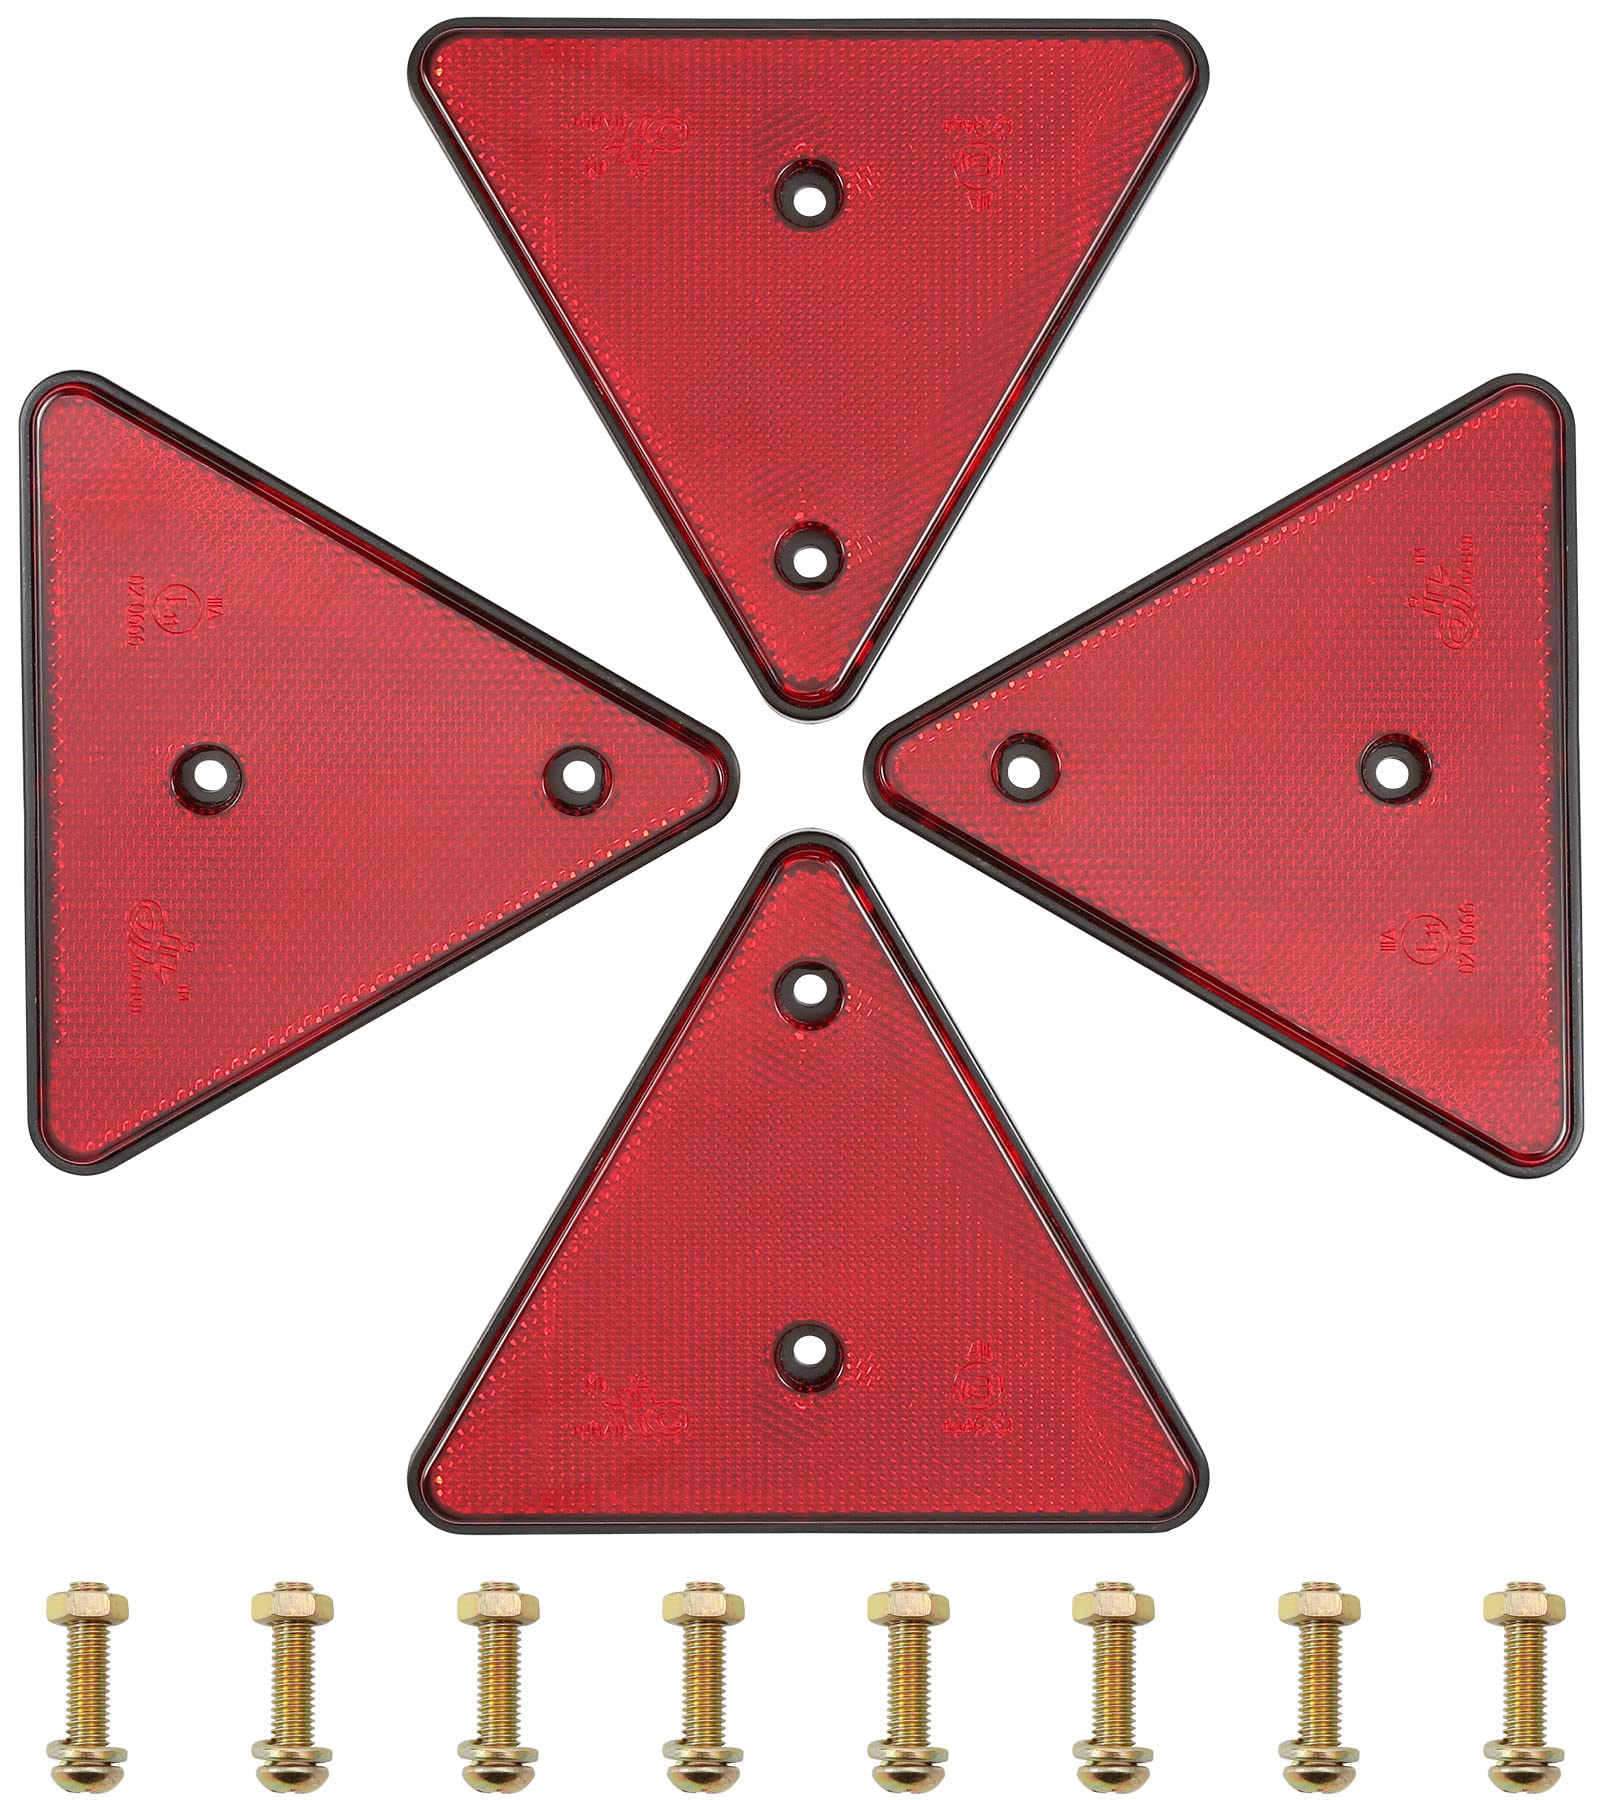 SPARKMOTO Dreieck Rückstrahler,anhänger dreieck rückstrahler reflektor,anhänger dreieck reflektor,rückstrahler dreieck rot für anhänger,Nach ECE R3 Class IIIA Norm Dreieck rückstrahler rot(4 Stück) von SPARKMOTO